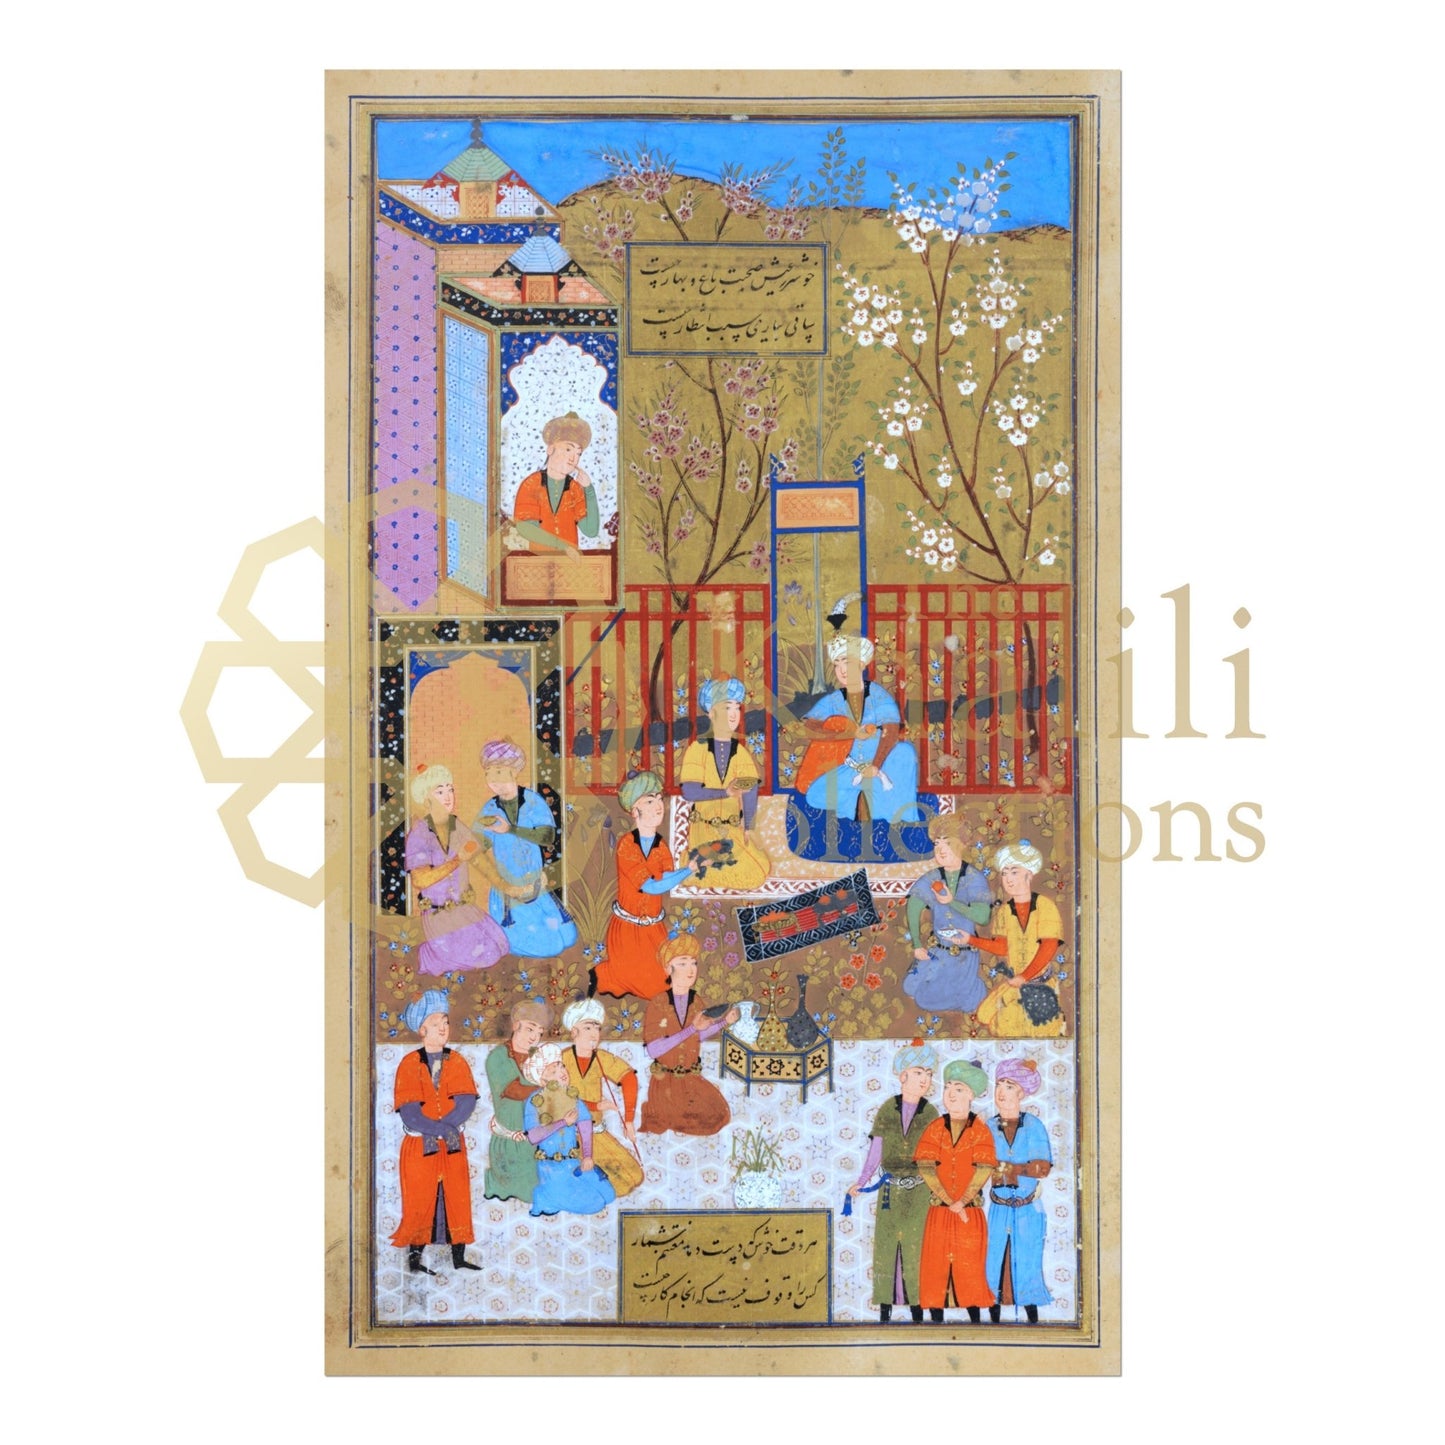 Entertainment In A Garden (Antique Persian Art from Divan of Hafiz) - Pathos Studio - Art Prints